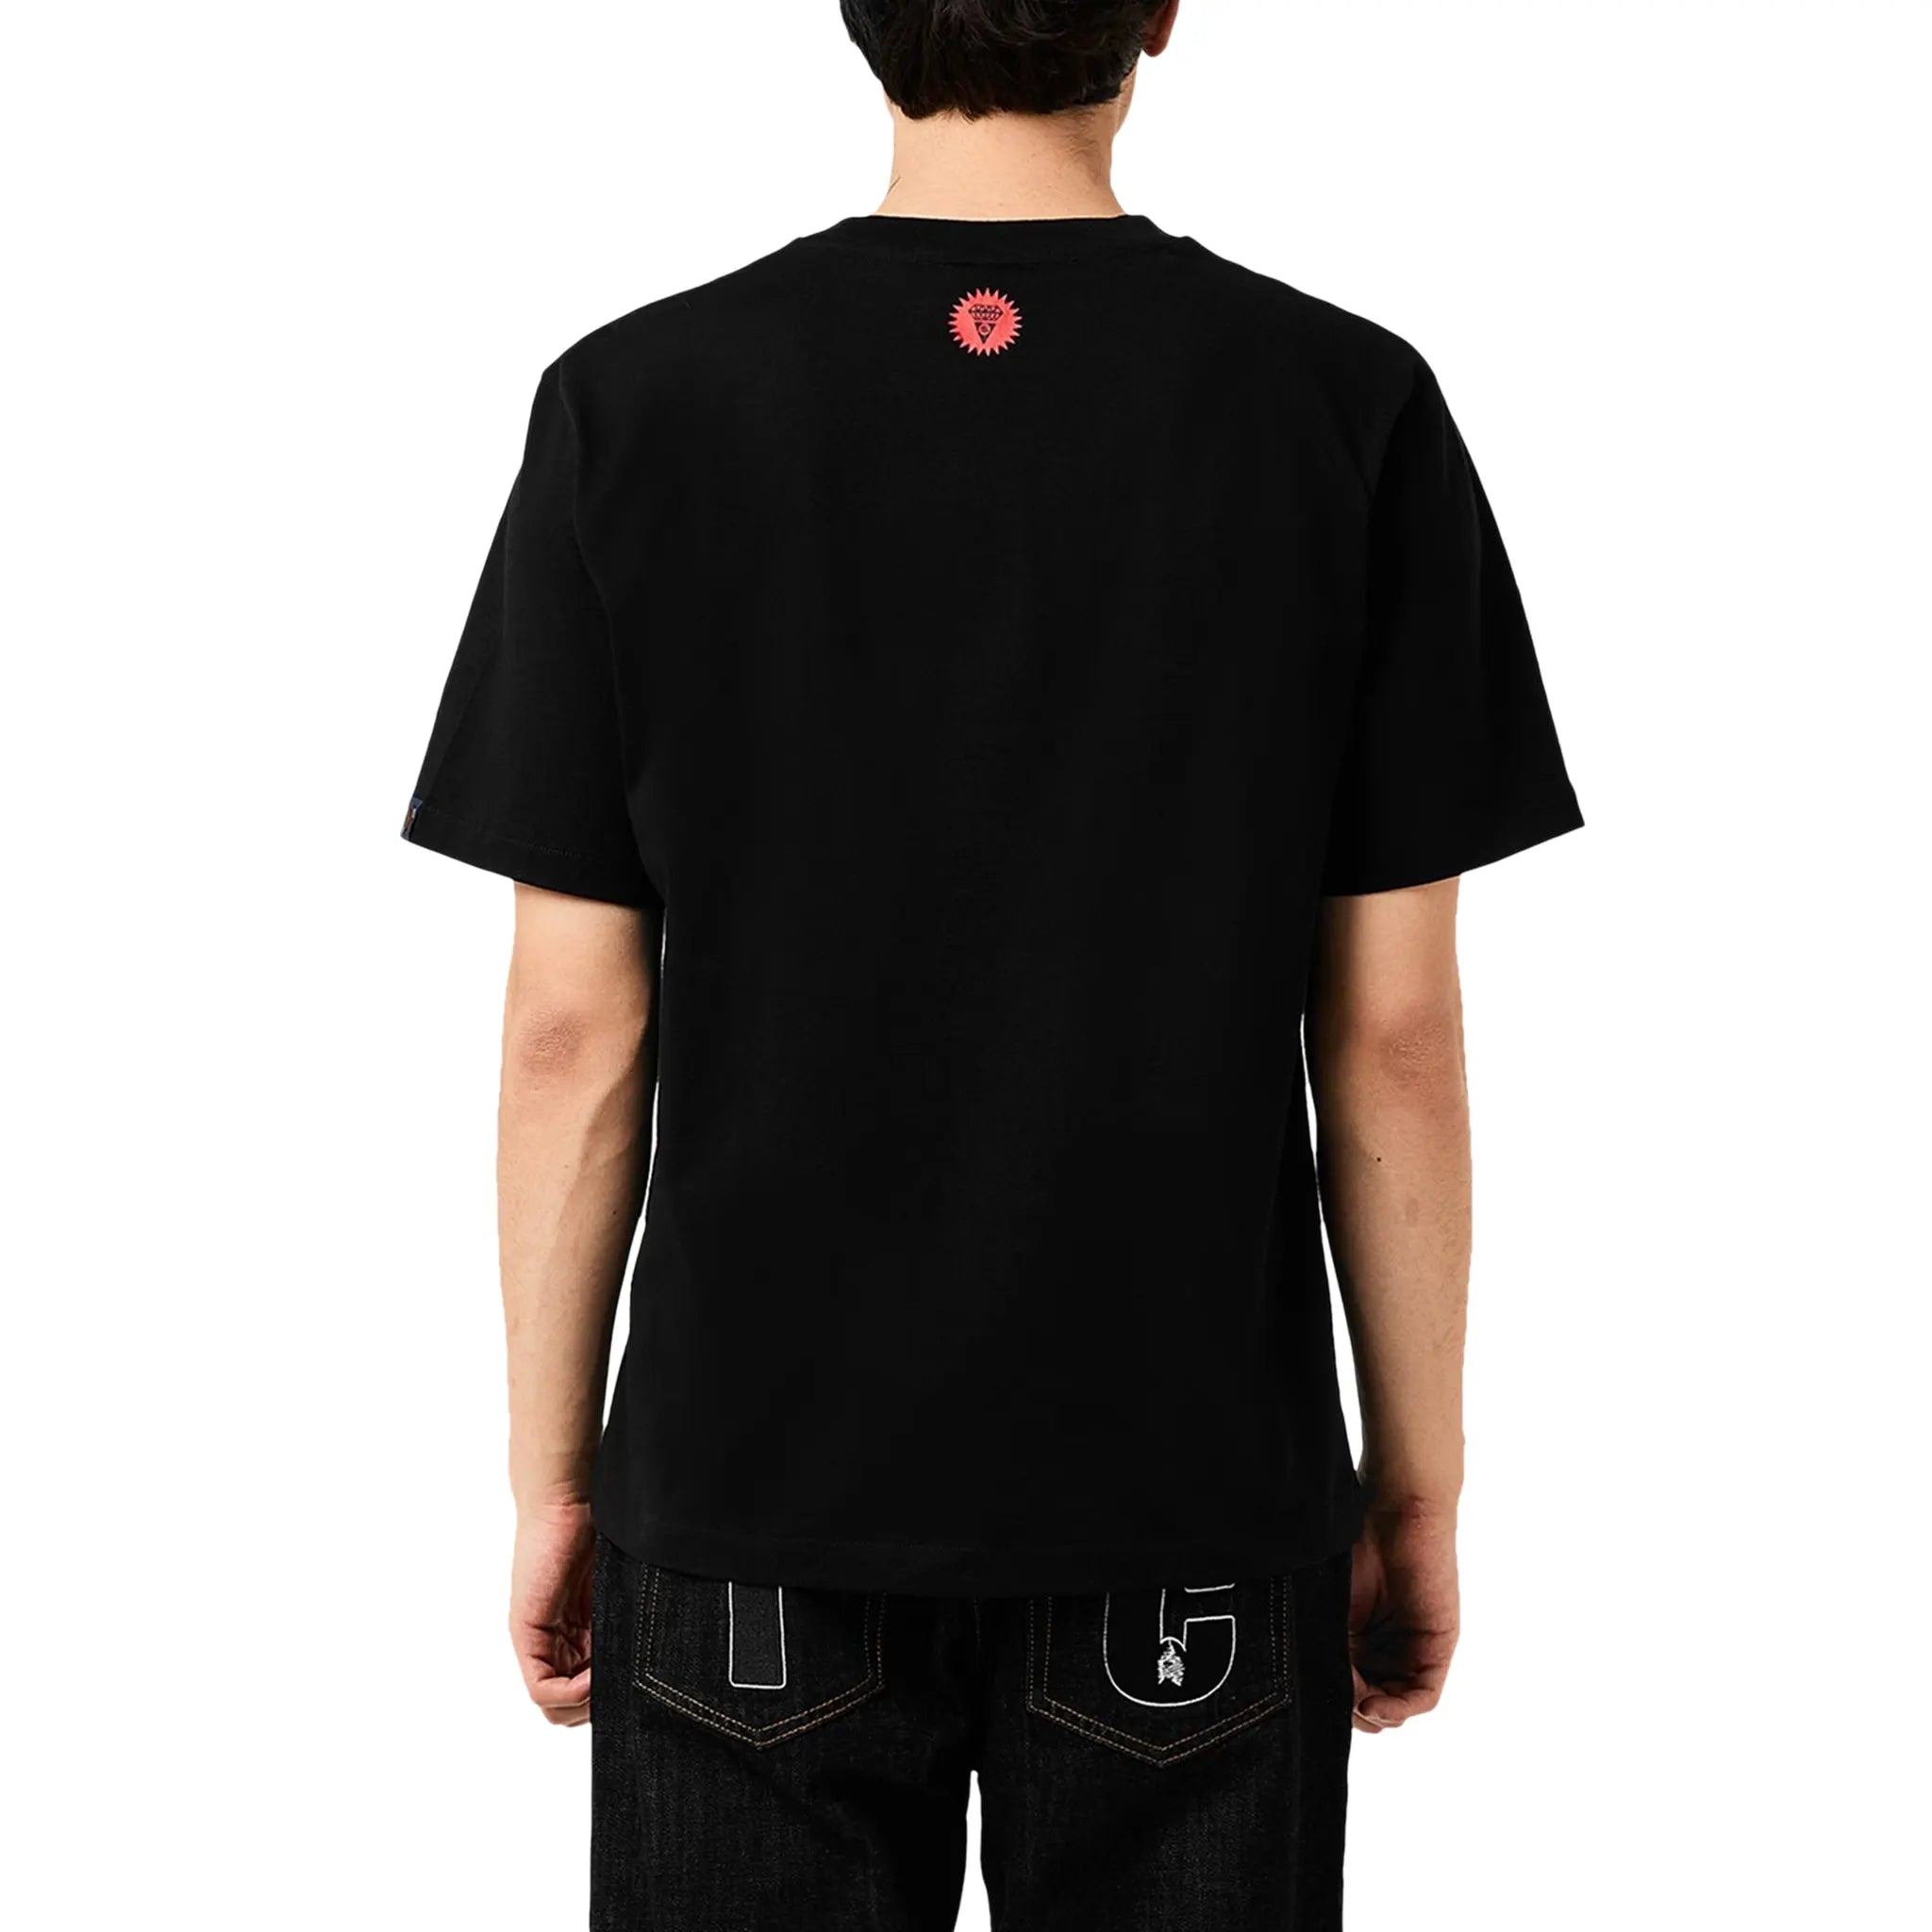 Back Detail view of Icecream IC Running Dog Black T Shirt ic23449-blk